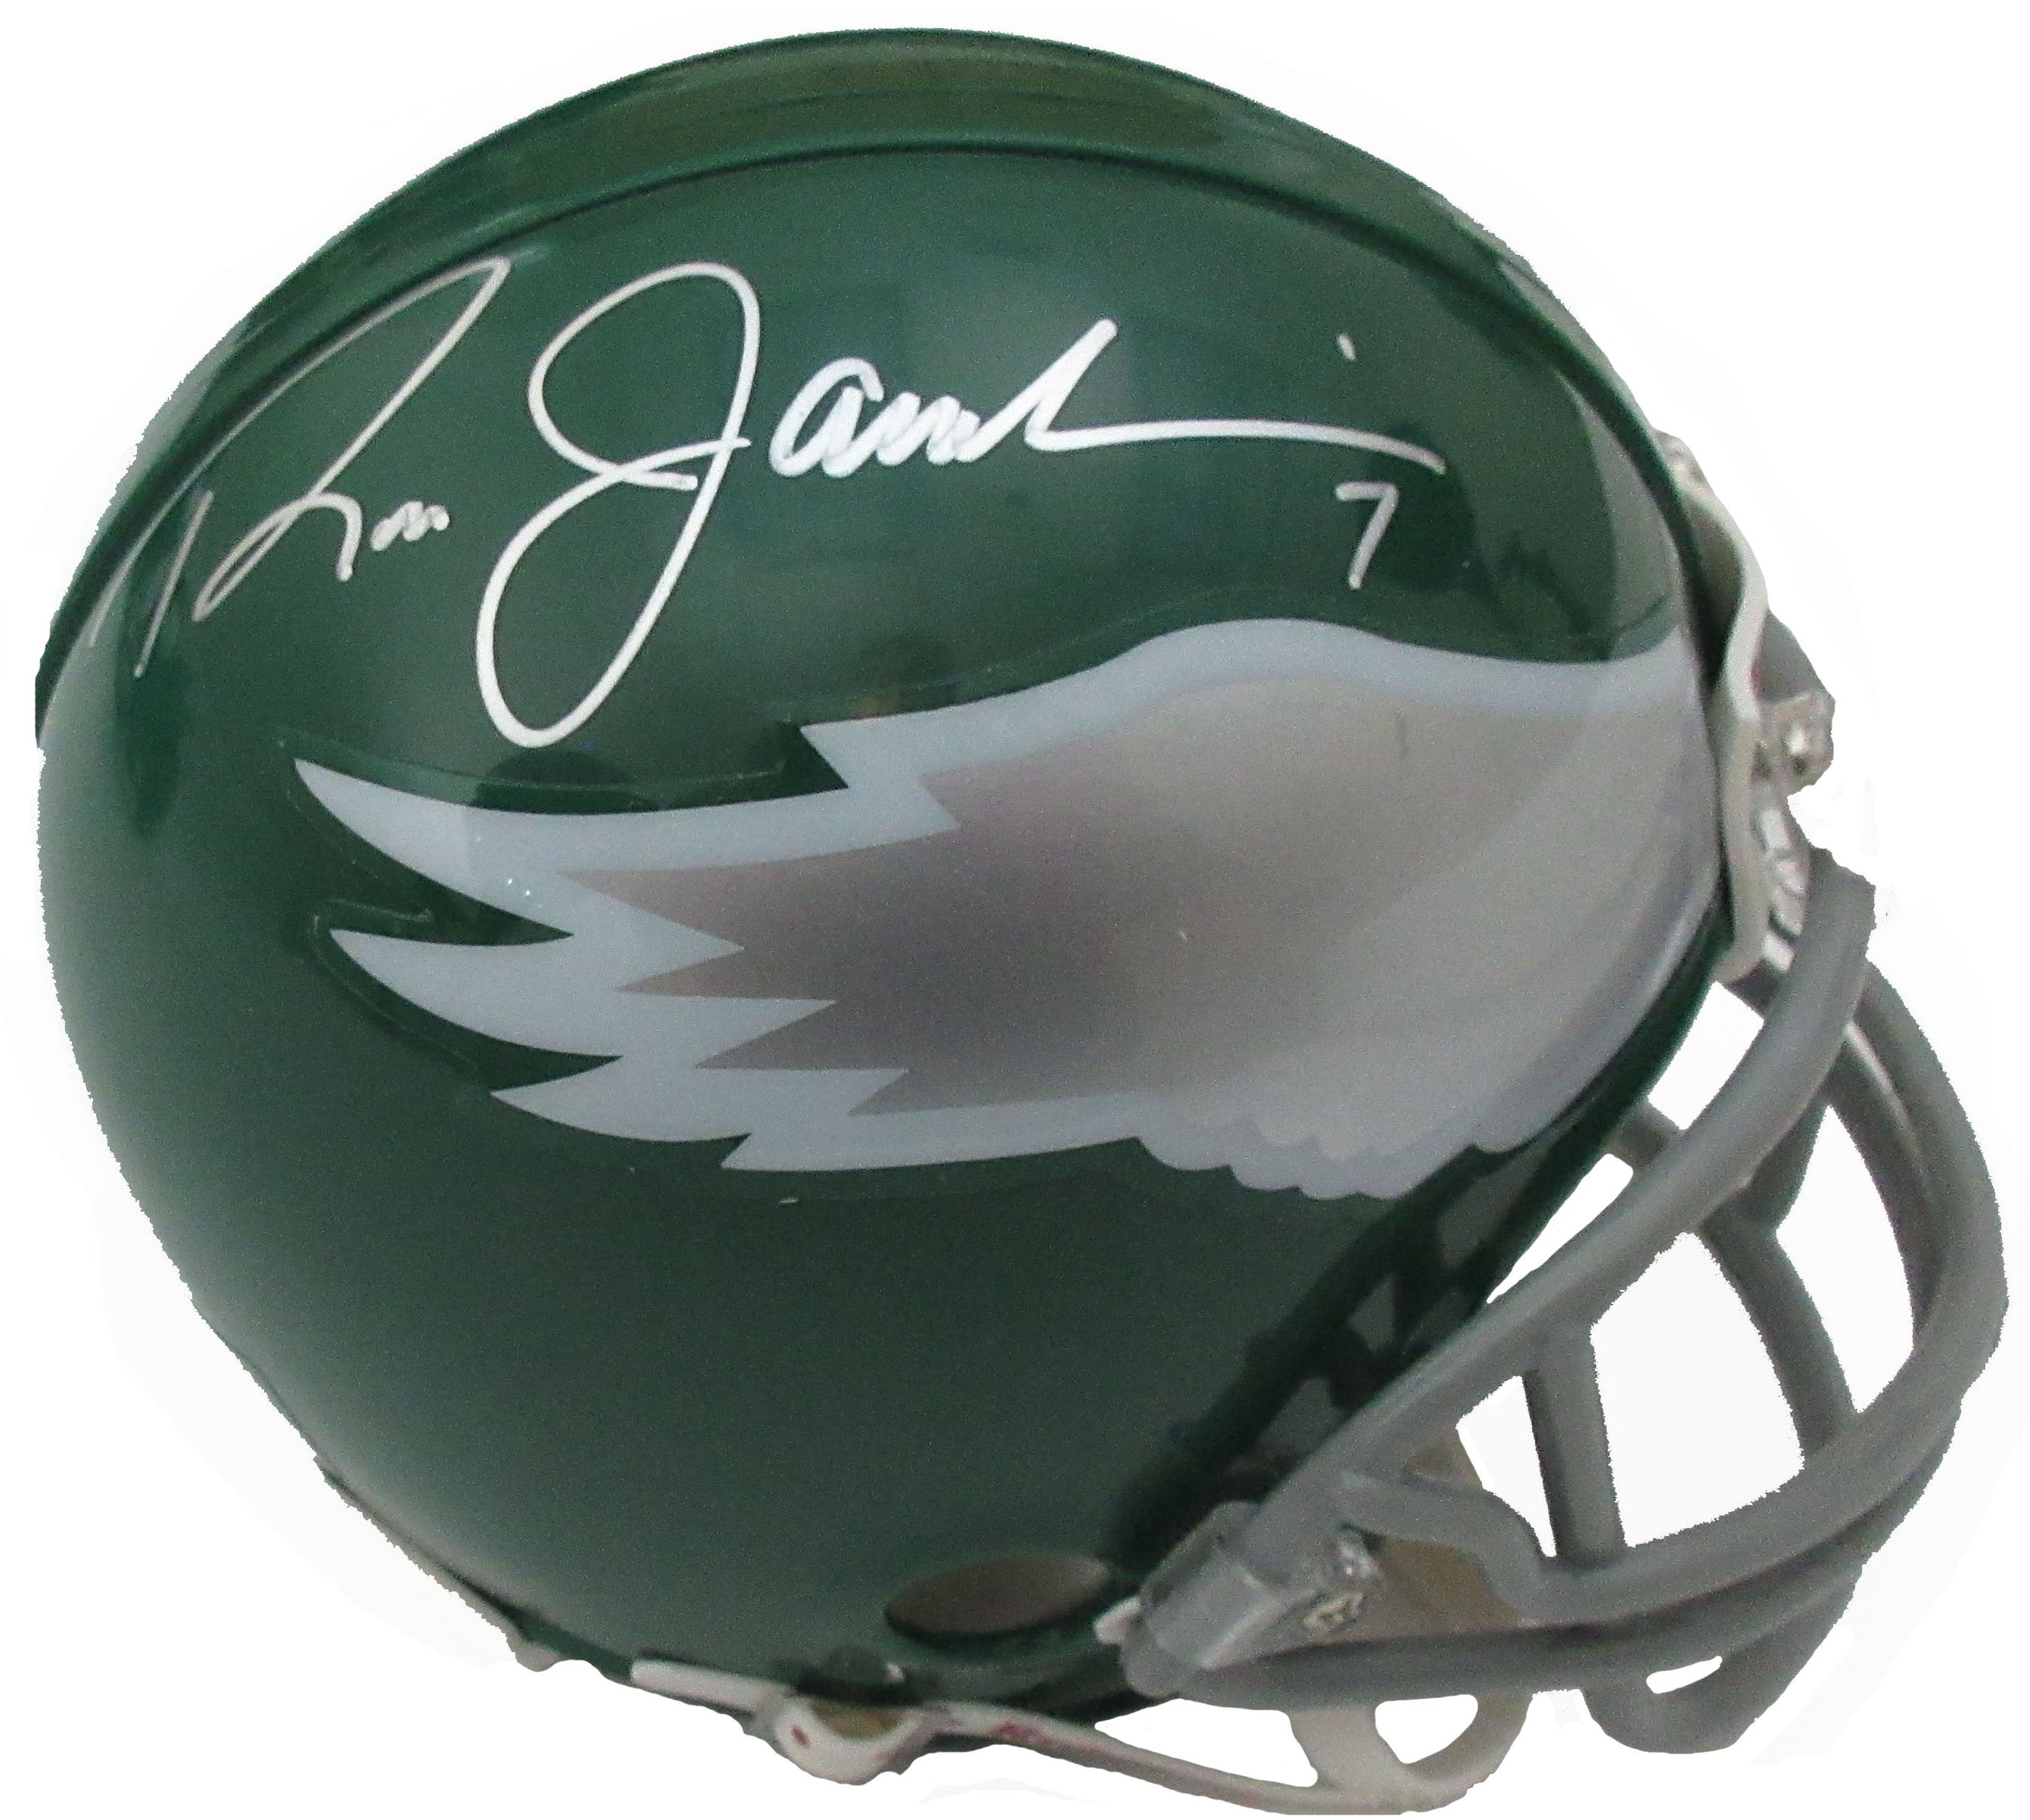 Philadelphia Eagles NFL Collectible Mini Helmet, Picture Inside